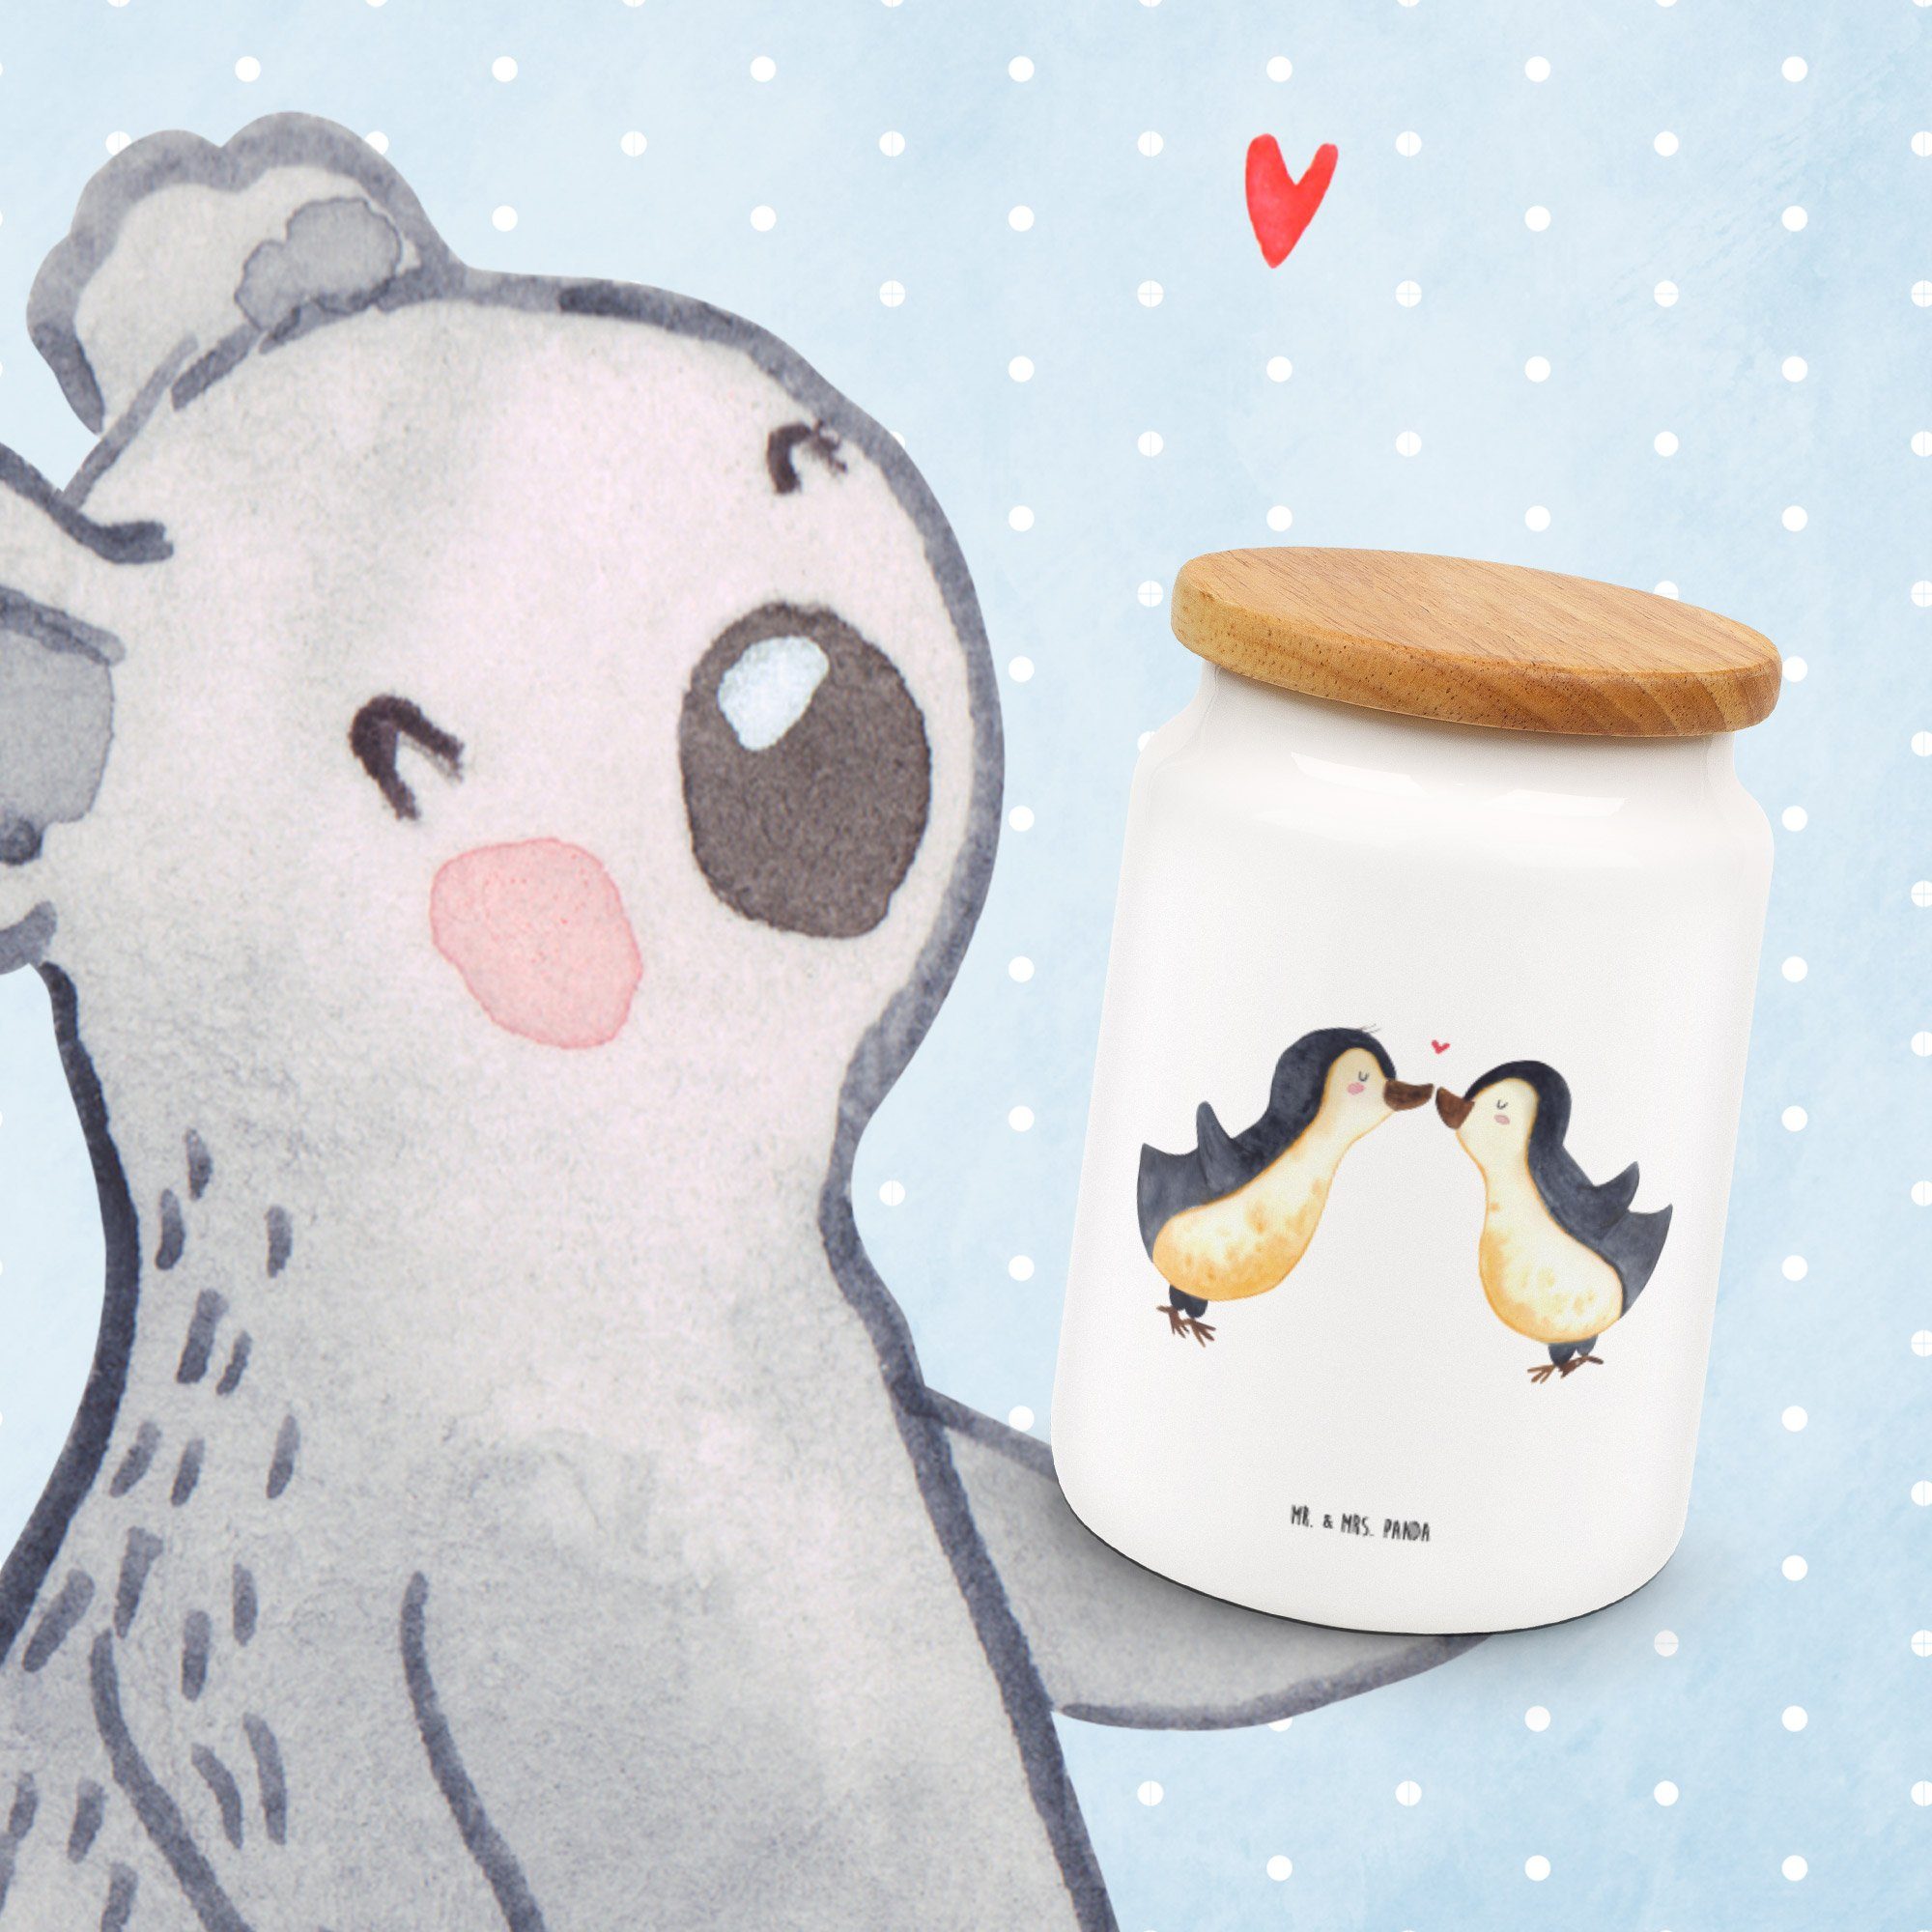 Pinguin Keramikdose, Geschenk, Vorratsdose Pärc, Liebe - Keramik, & Weiß Panda - (1-tlg) Ehemann, Freundin, Mr. Mrs.